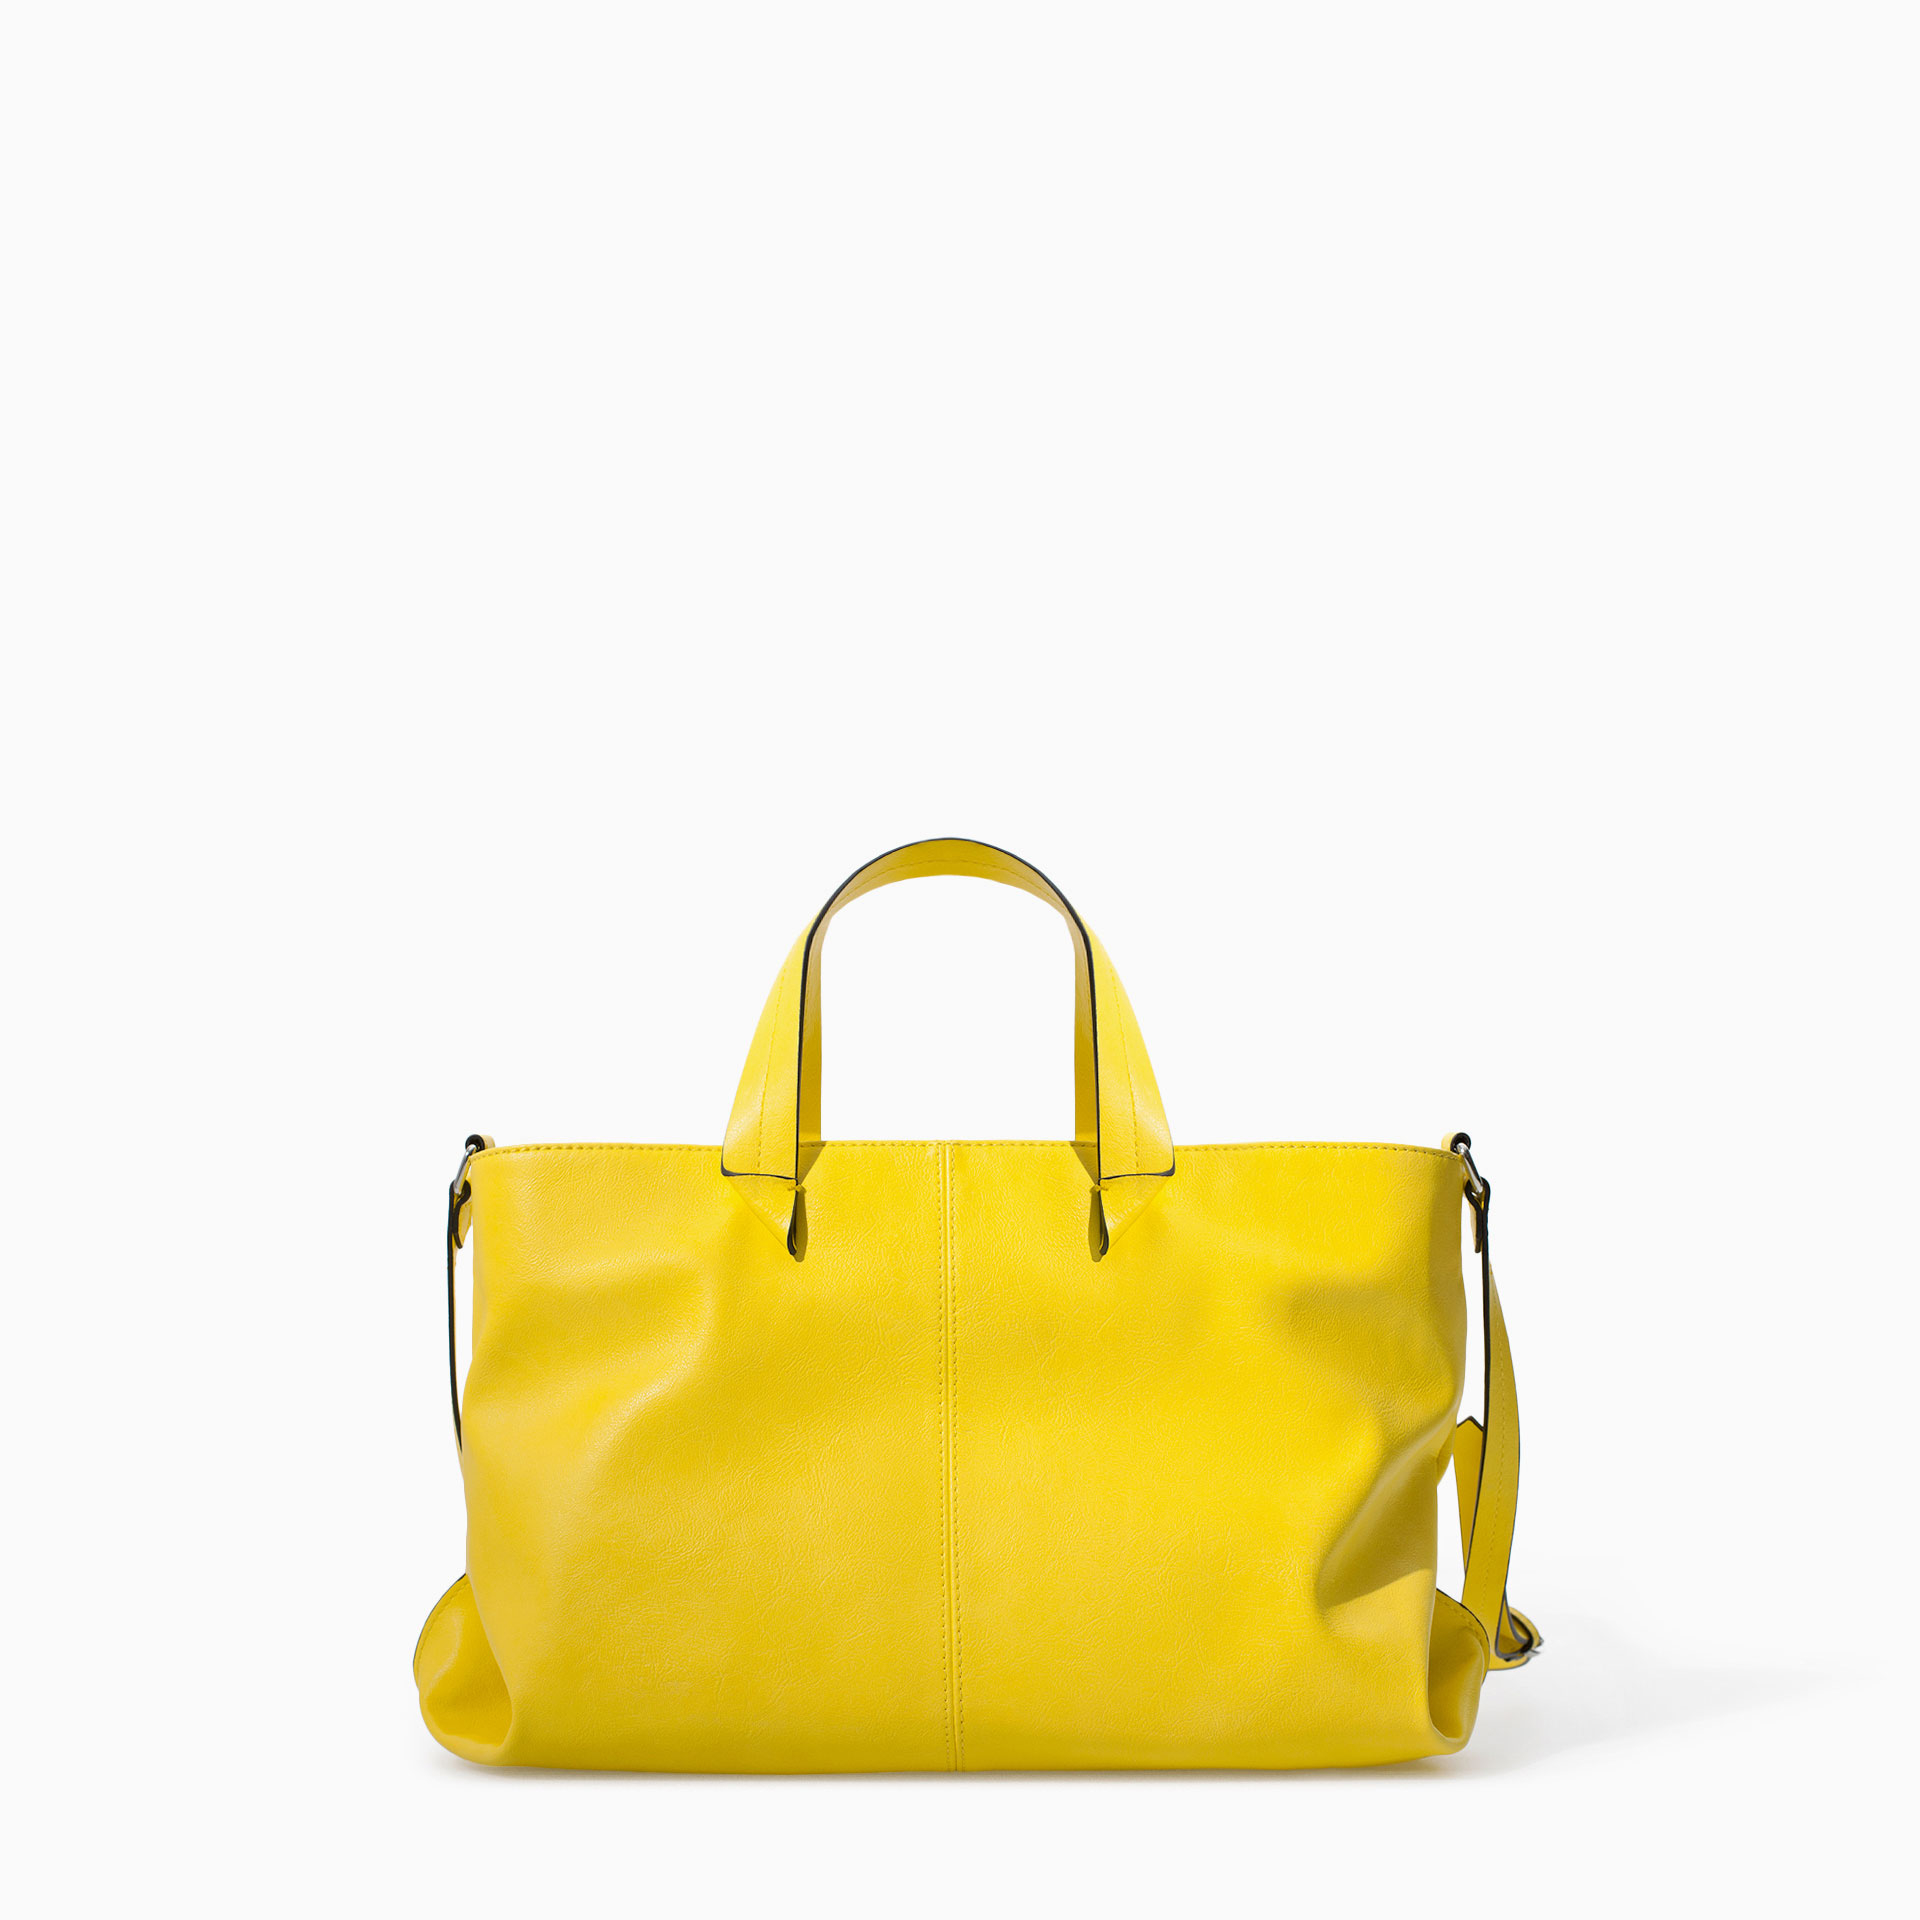 Zara White Tote Bag in Yellow | Lyst